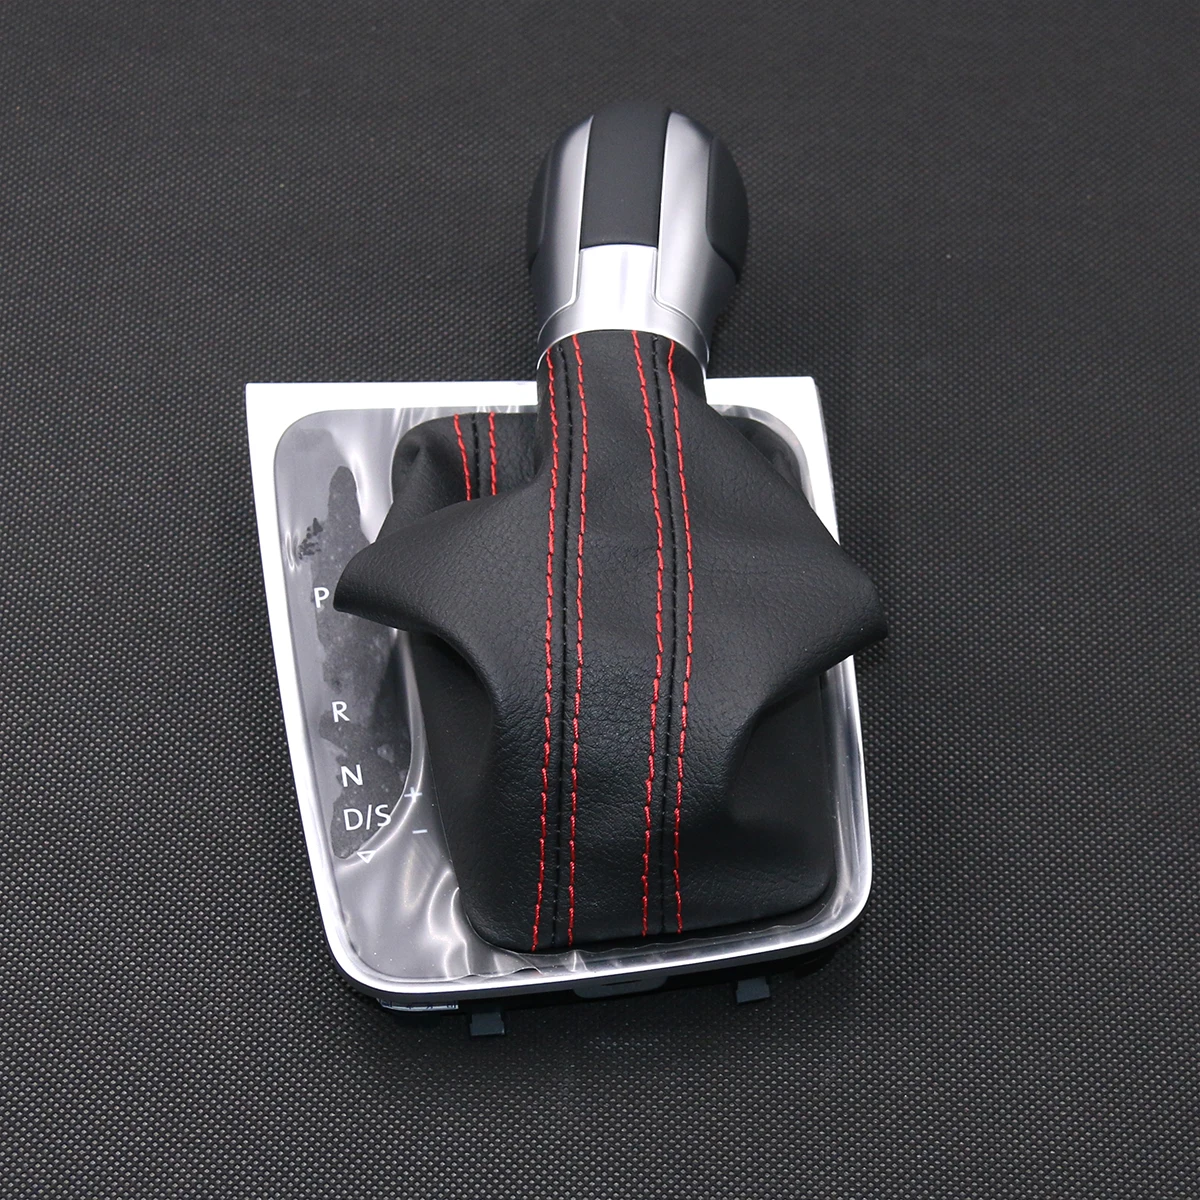 DSG Genuine leather red line stitch Gear Shift knob For Golf 7 MK7